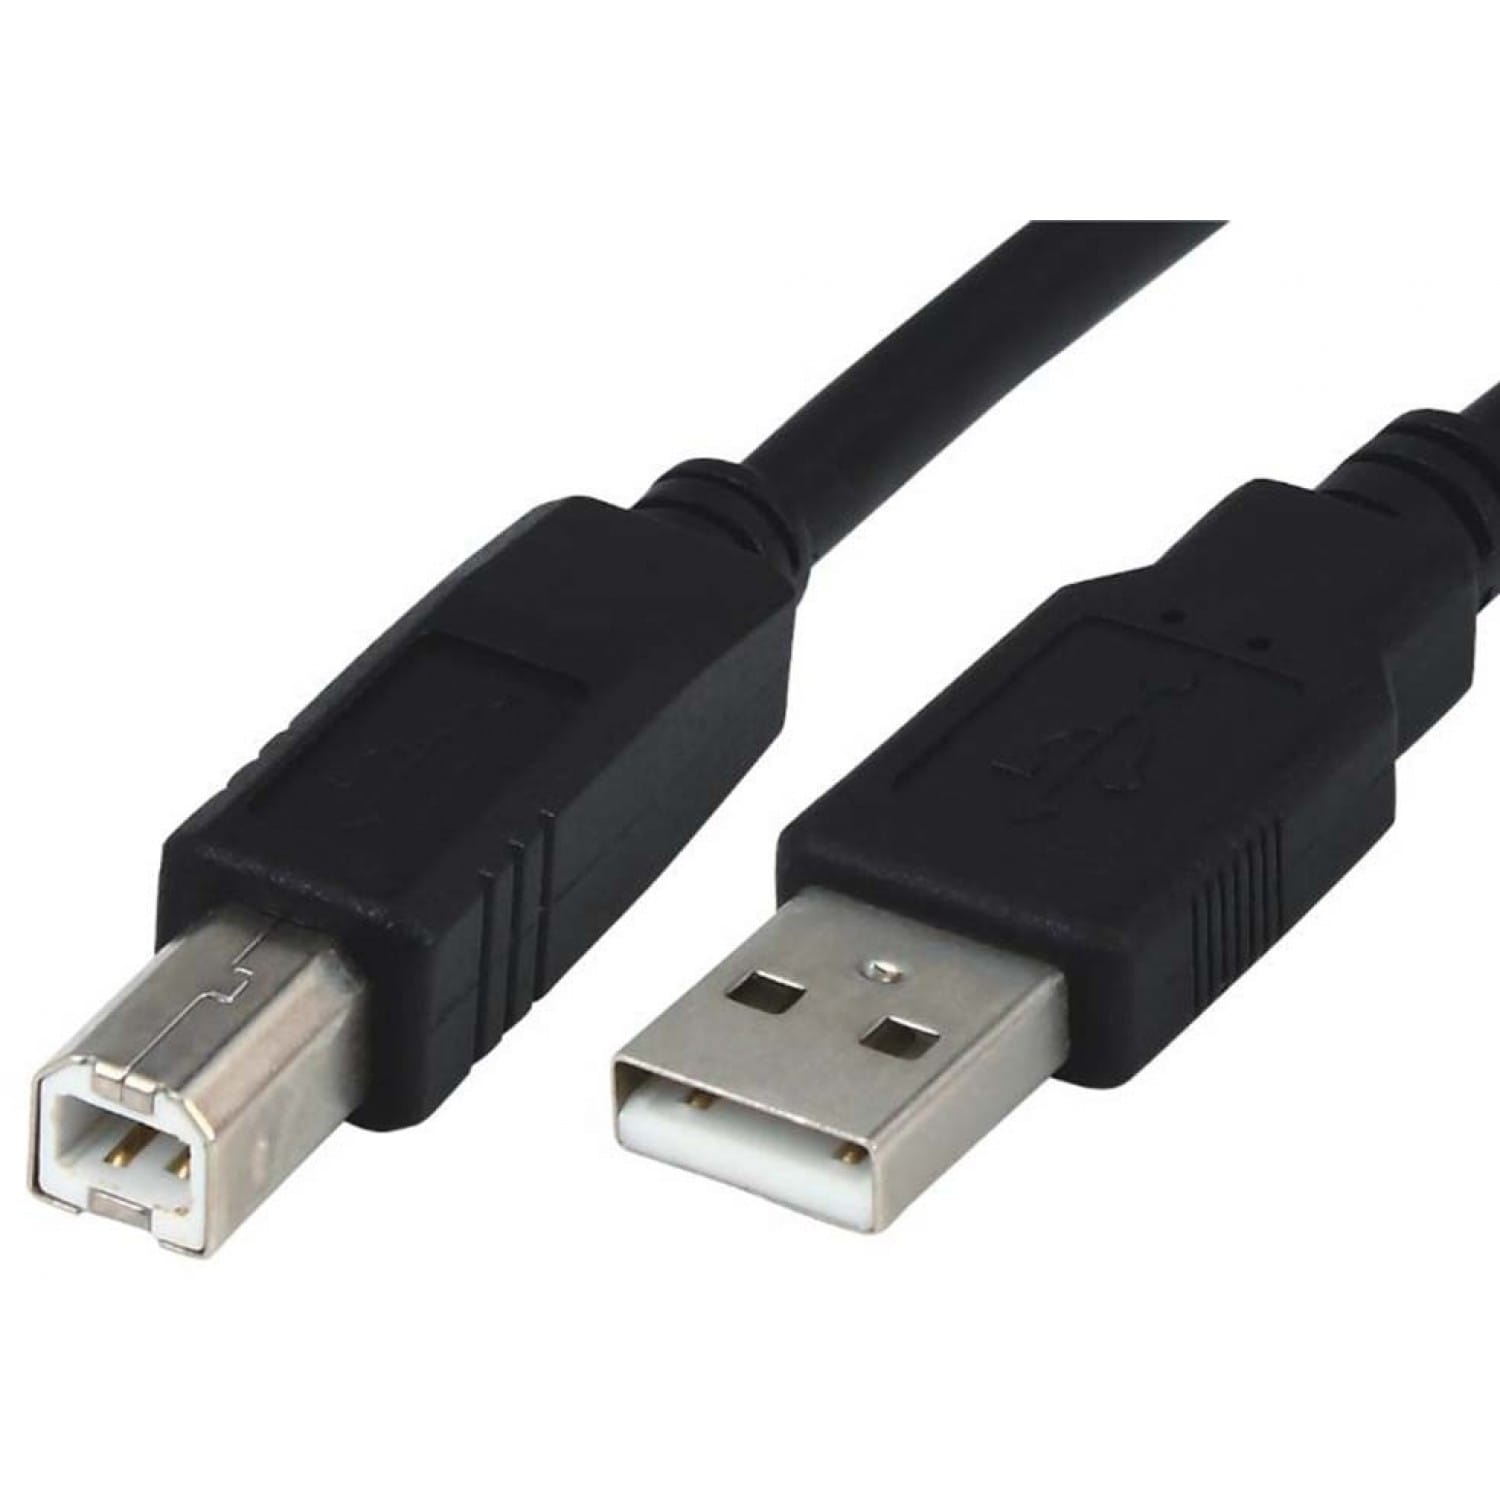 Câble MB TECH USB-A / USB-B pour imprimantes Epson/Canon/Samsung/HP/DNP/Mitsubishi/Fuji  - 1 mètre - Noir